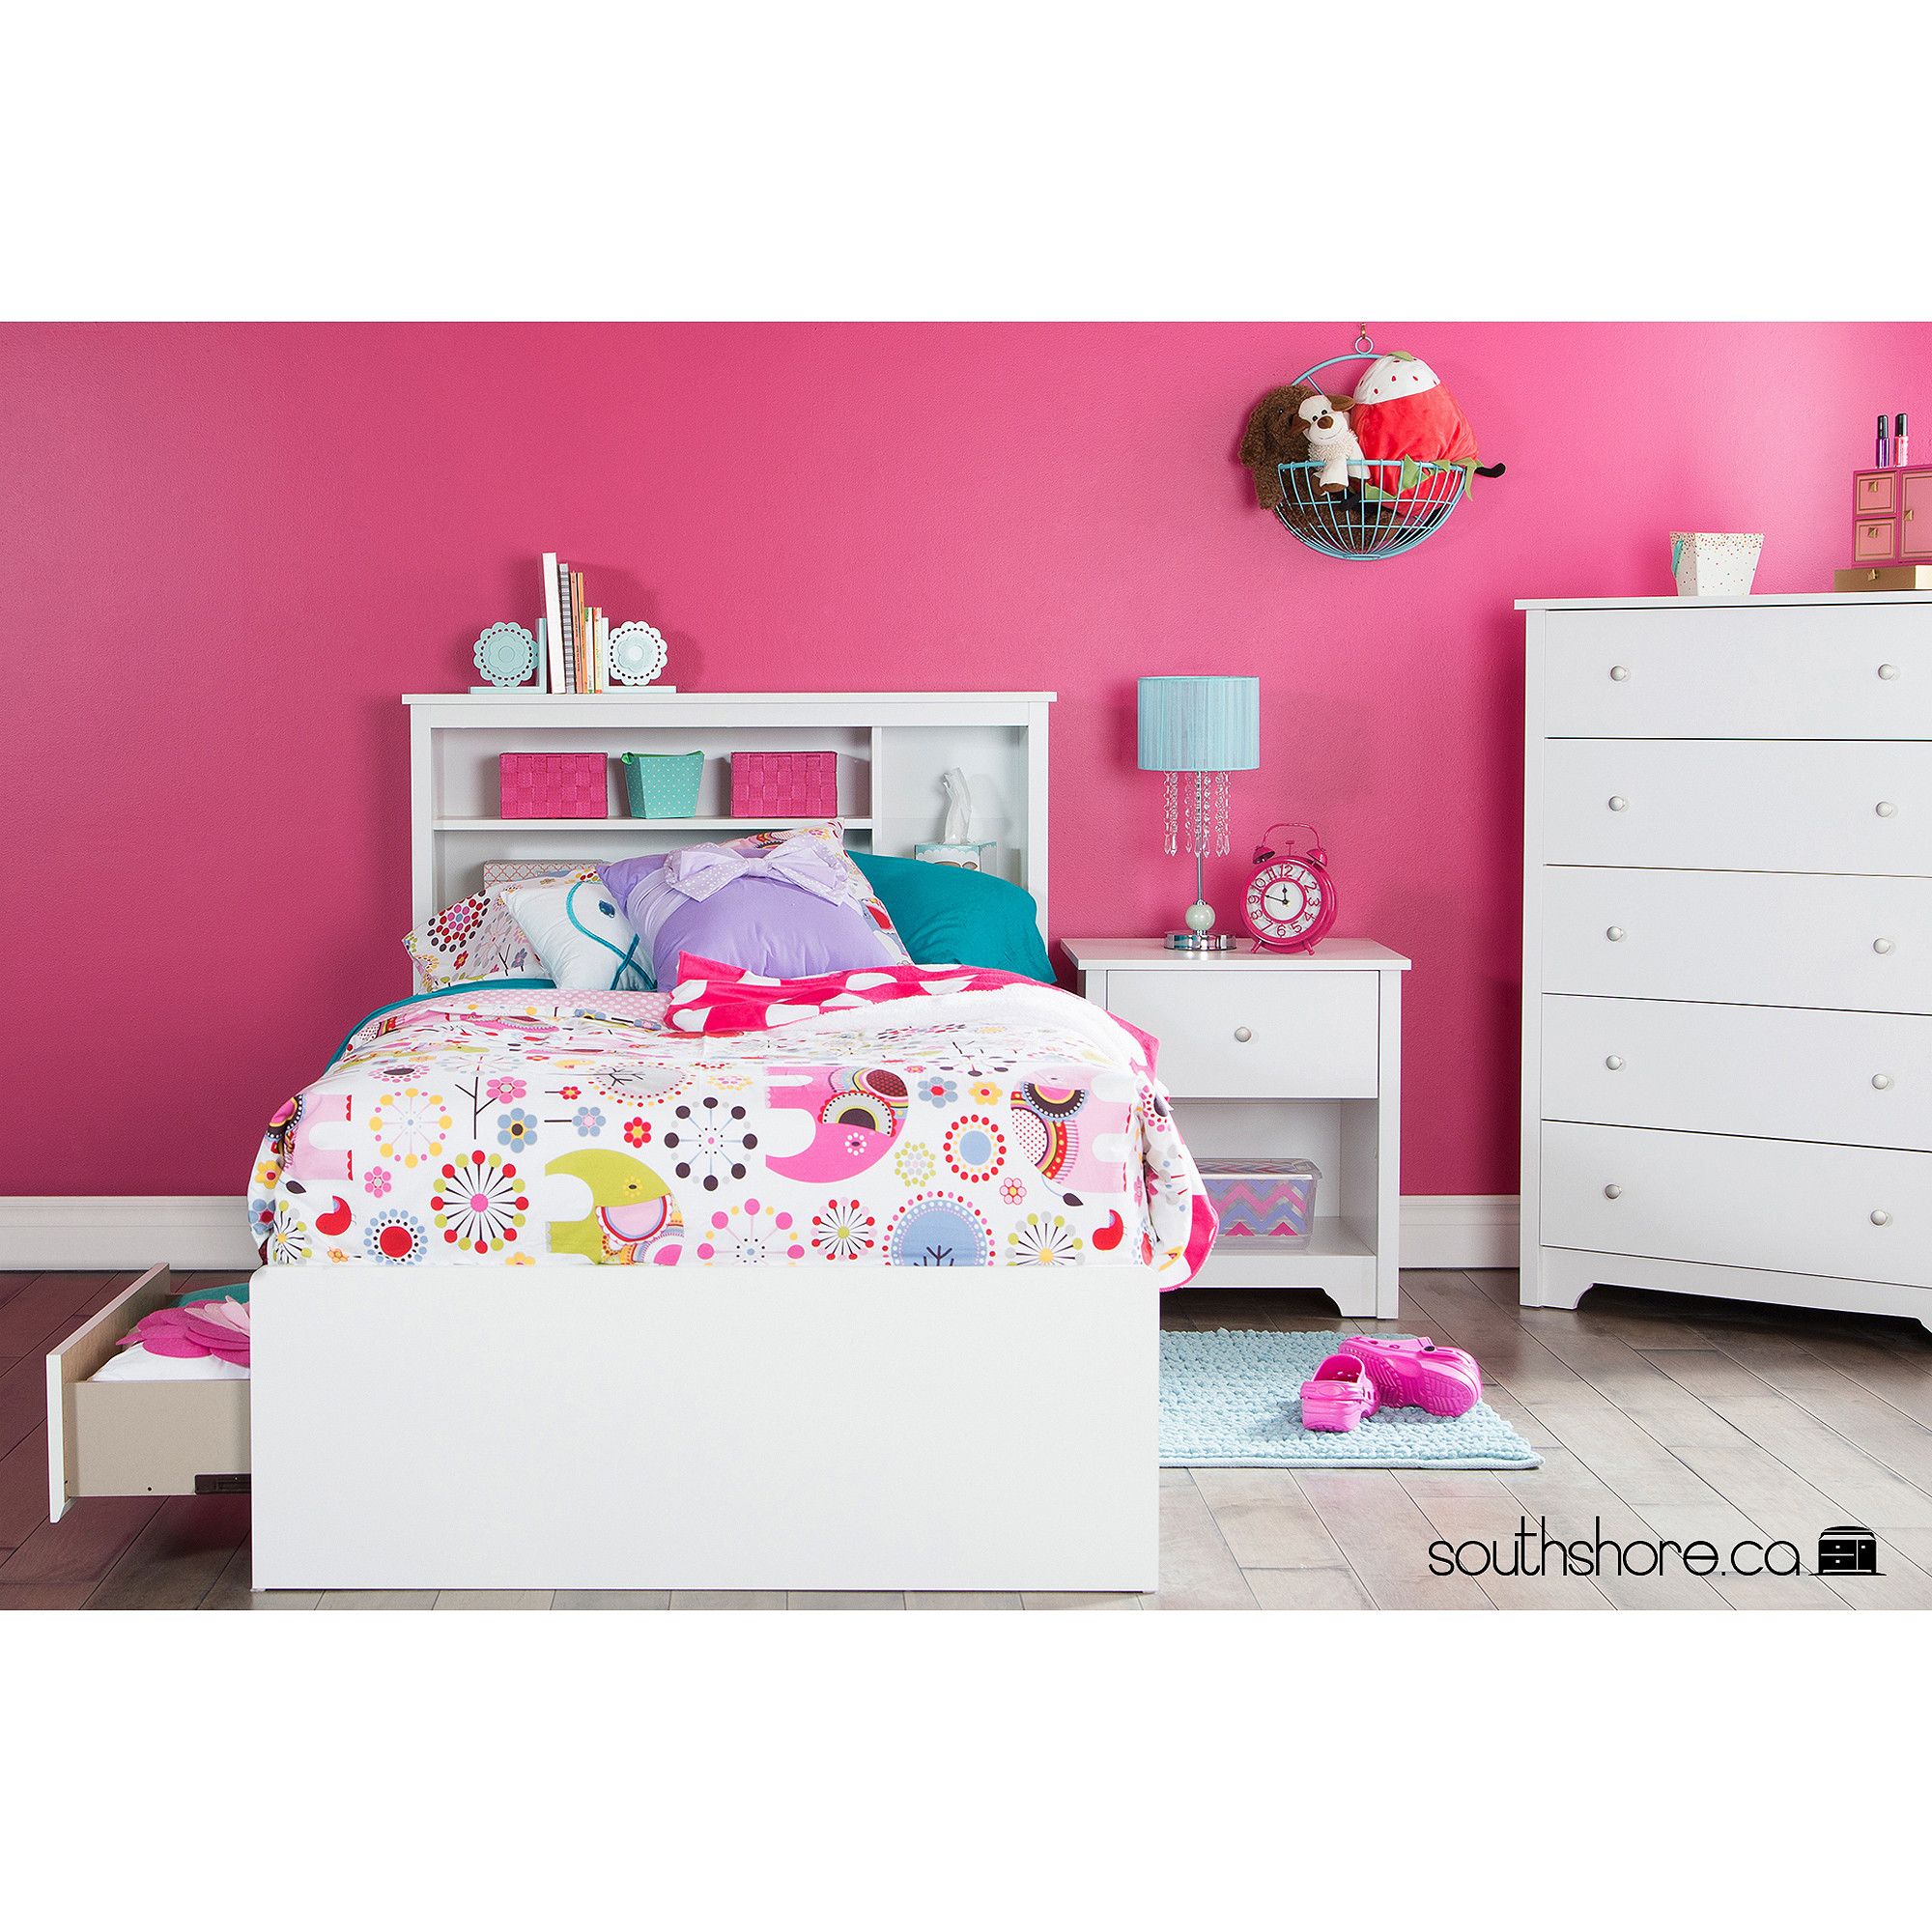 Walmart Kids Bedroom Furniture
 South Shore Vito Baby and Kids Bedroom Furniture